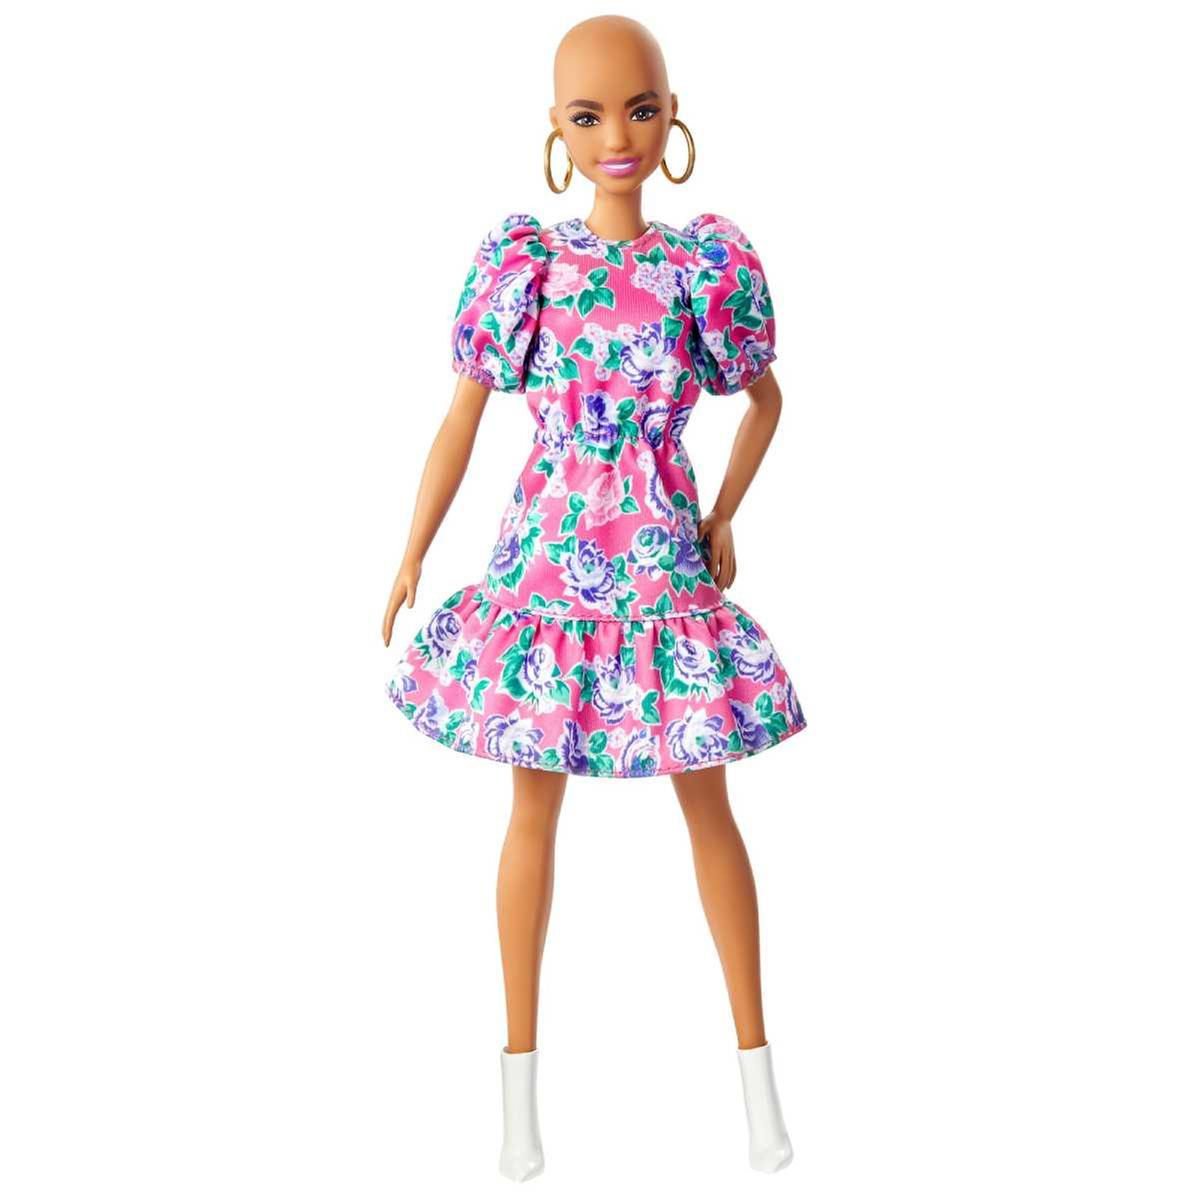 Gaviota algodón Volver a disparar Barbie - Muñeca Fashionista - Alopécica con vestidos de flores | Barbie |  Toys"R"Us España